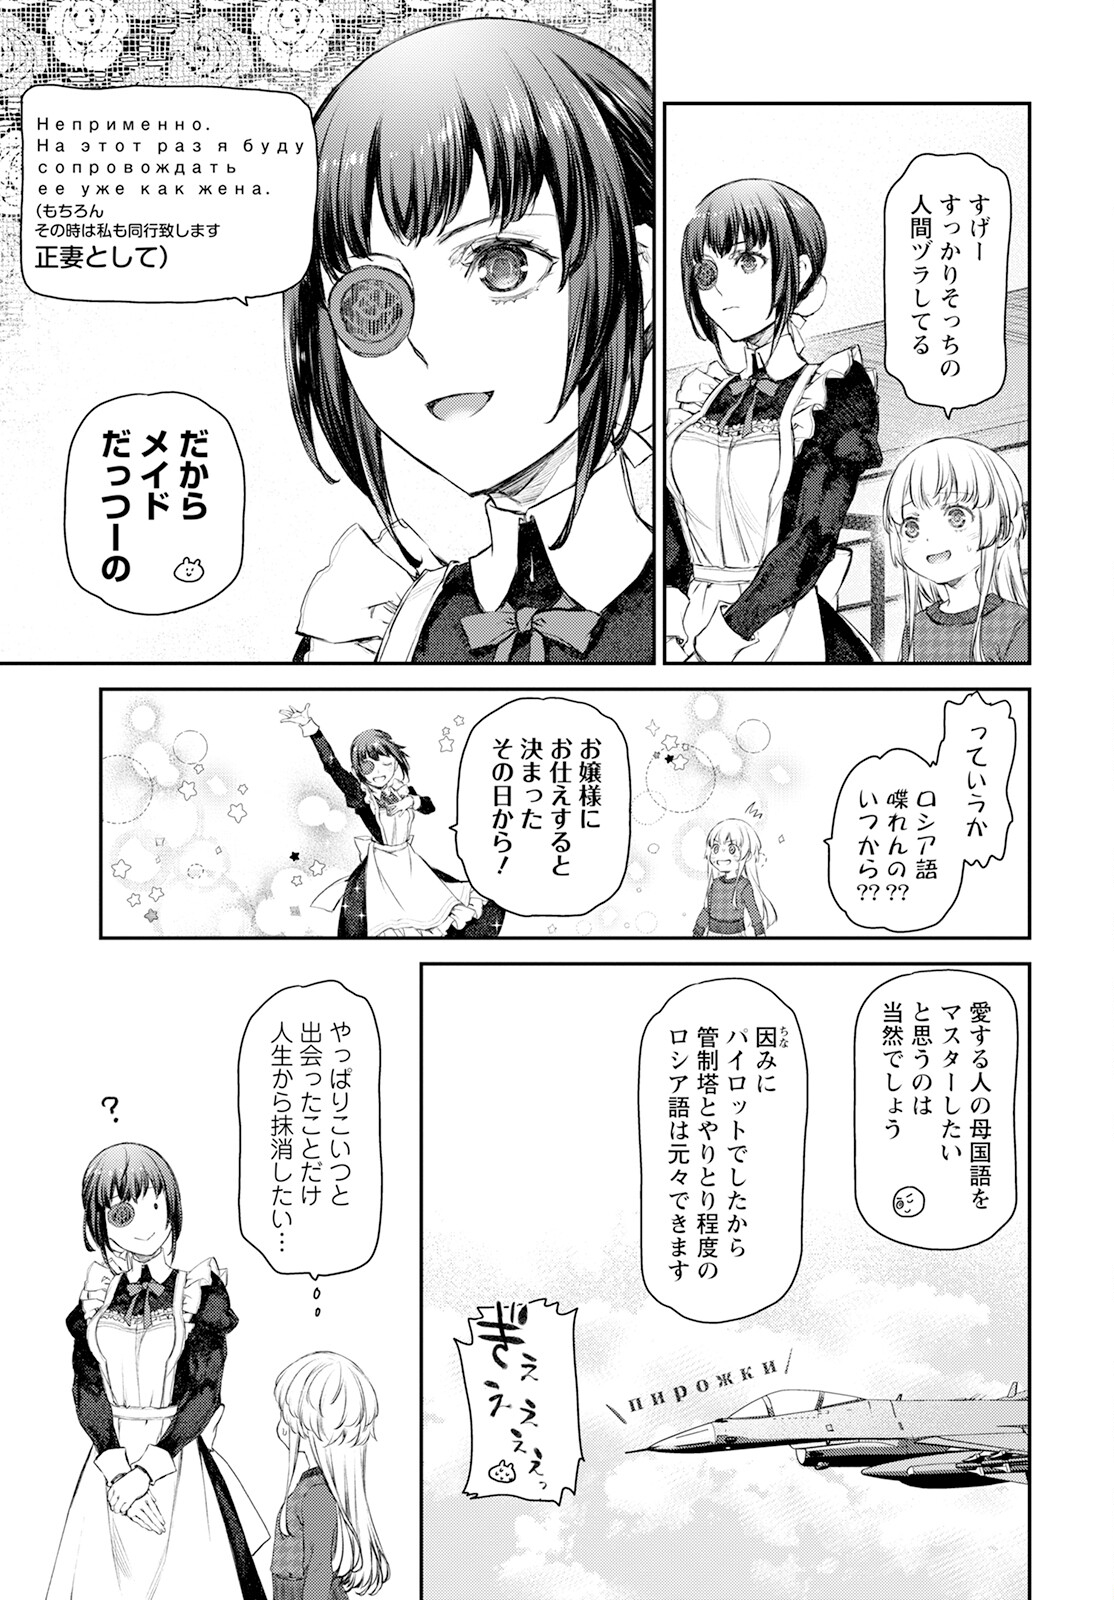 Uchi no Maid ga Uzasugiru! - Chapter 58 - Page 15